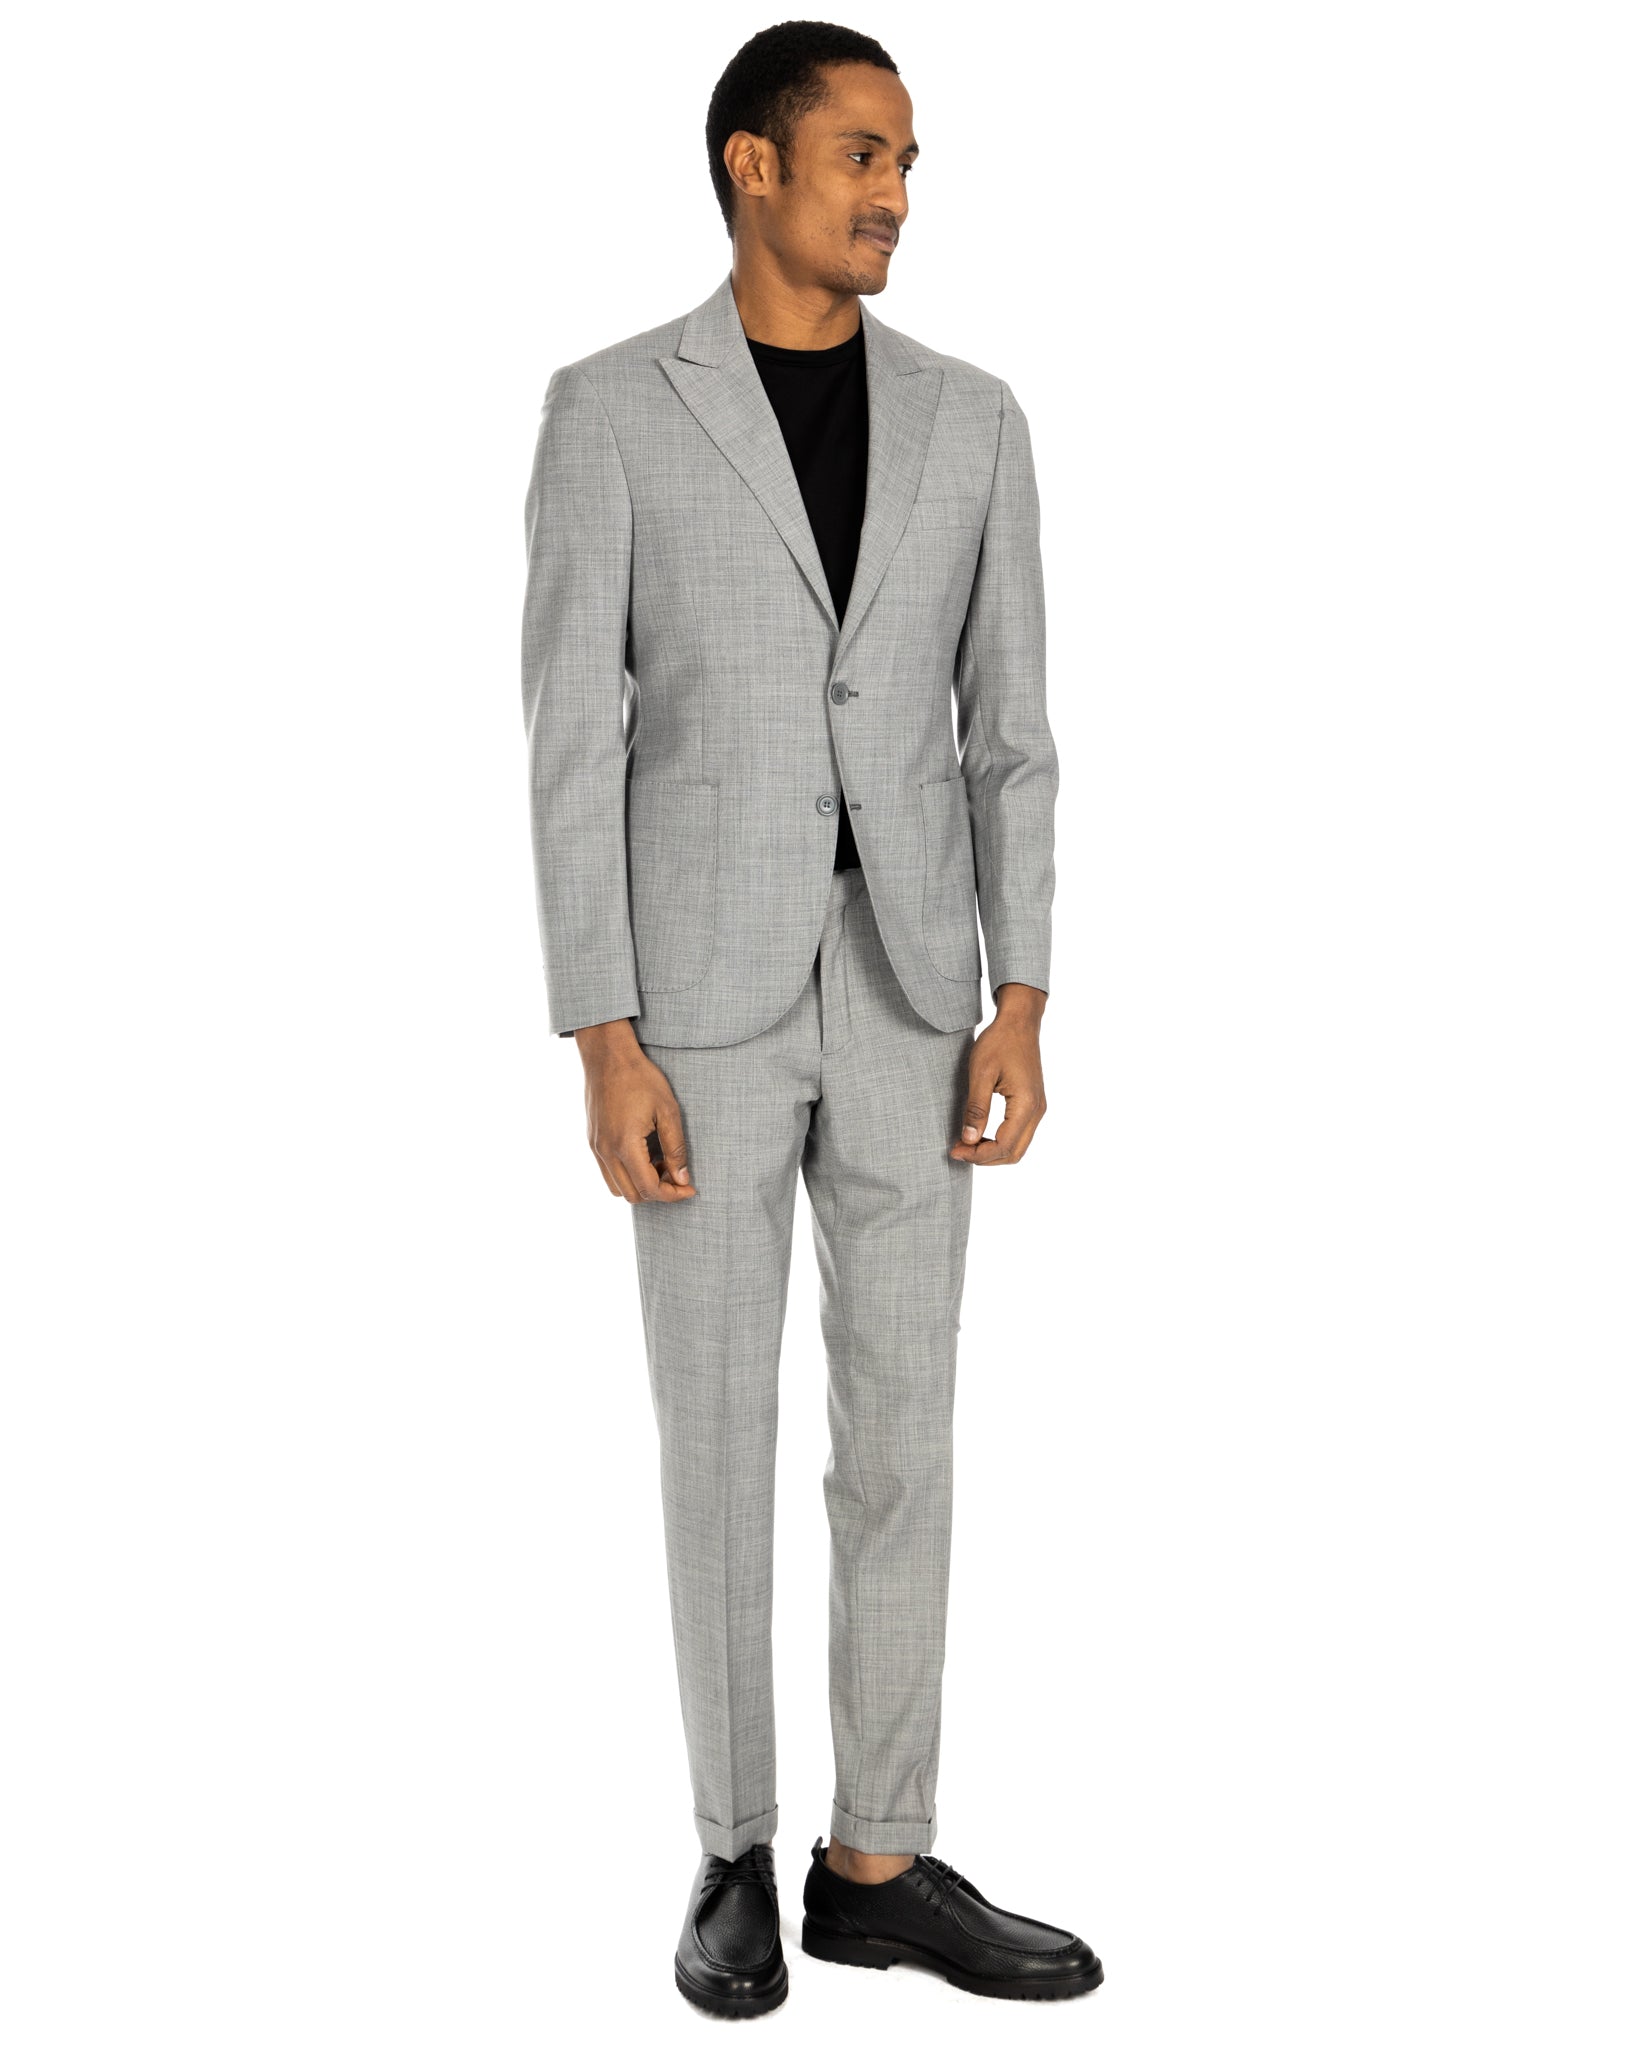 Naples - gray wool blend suit